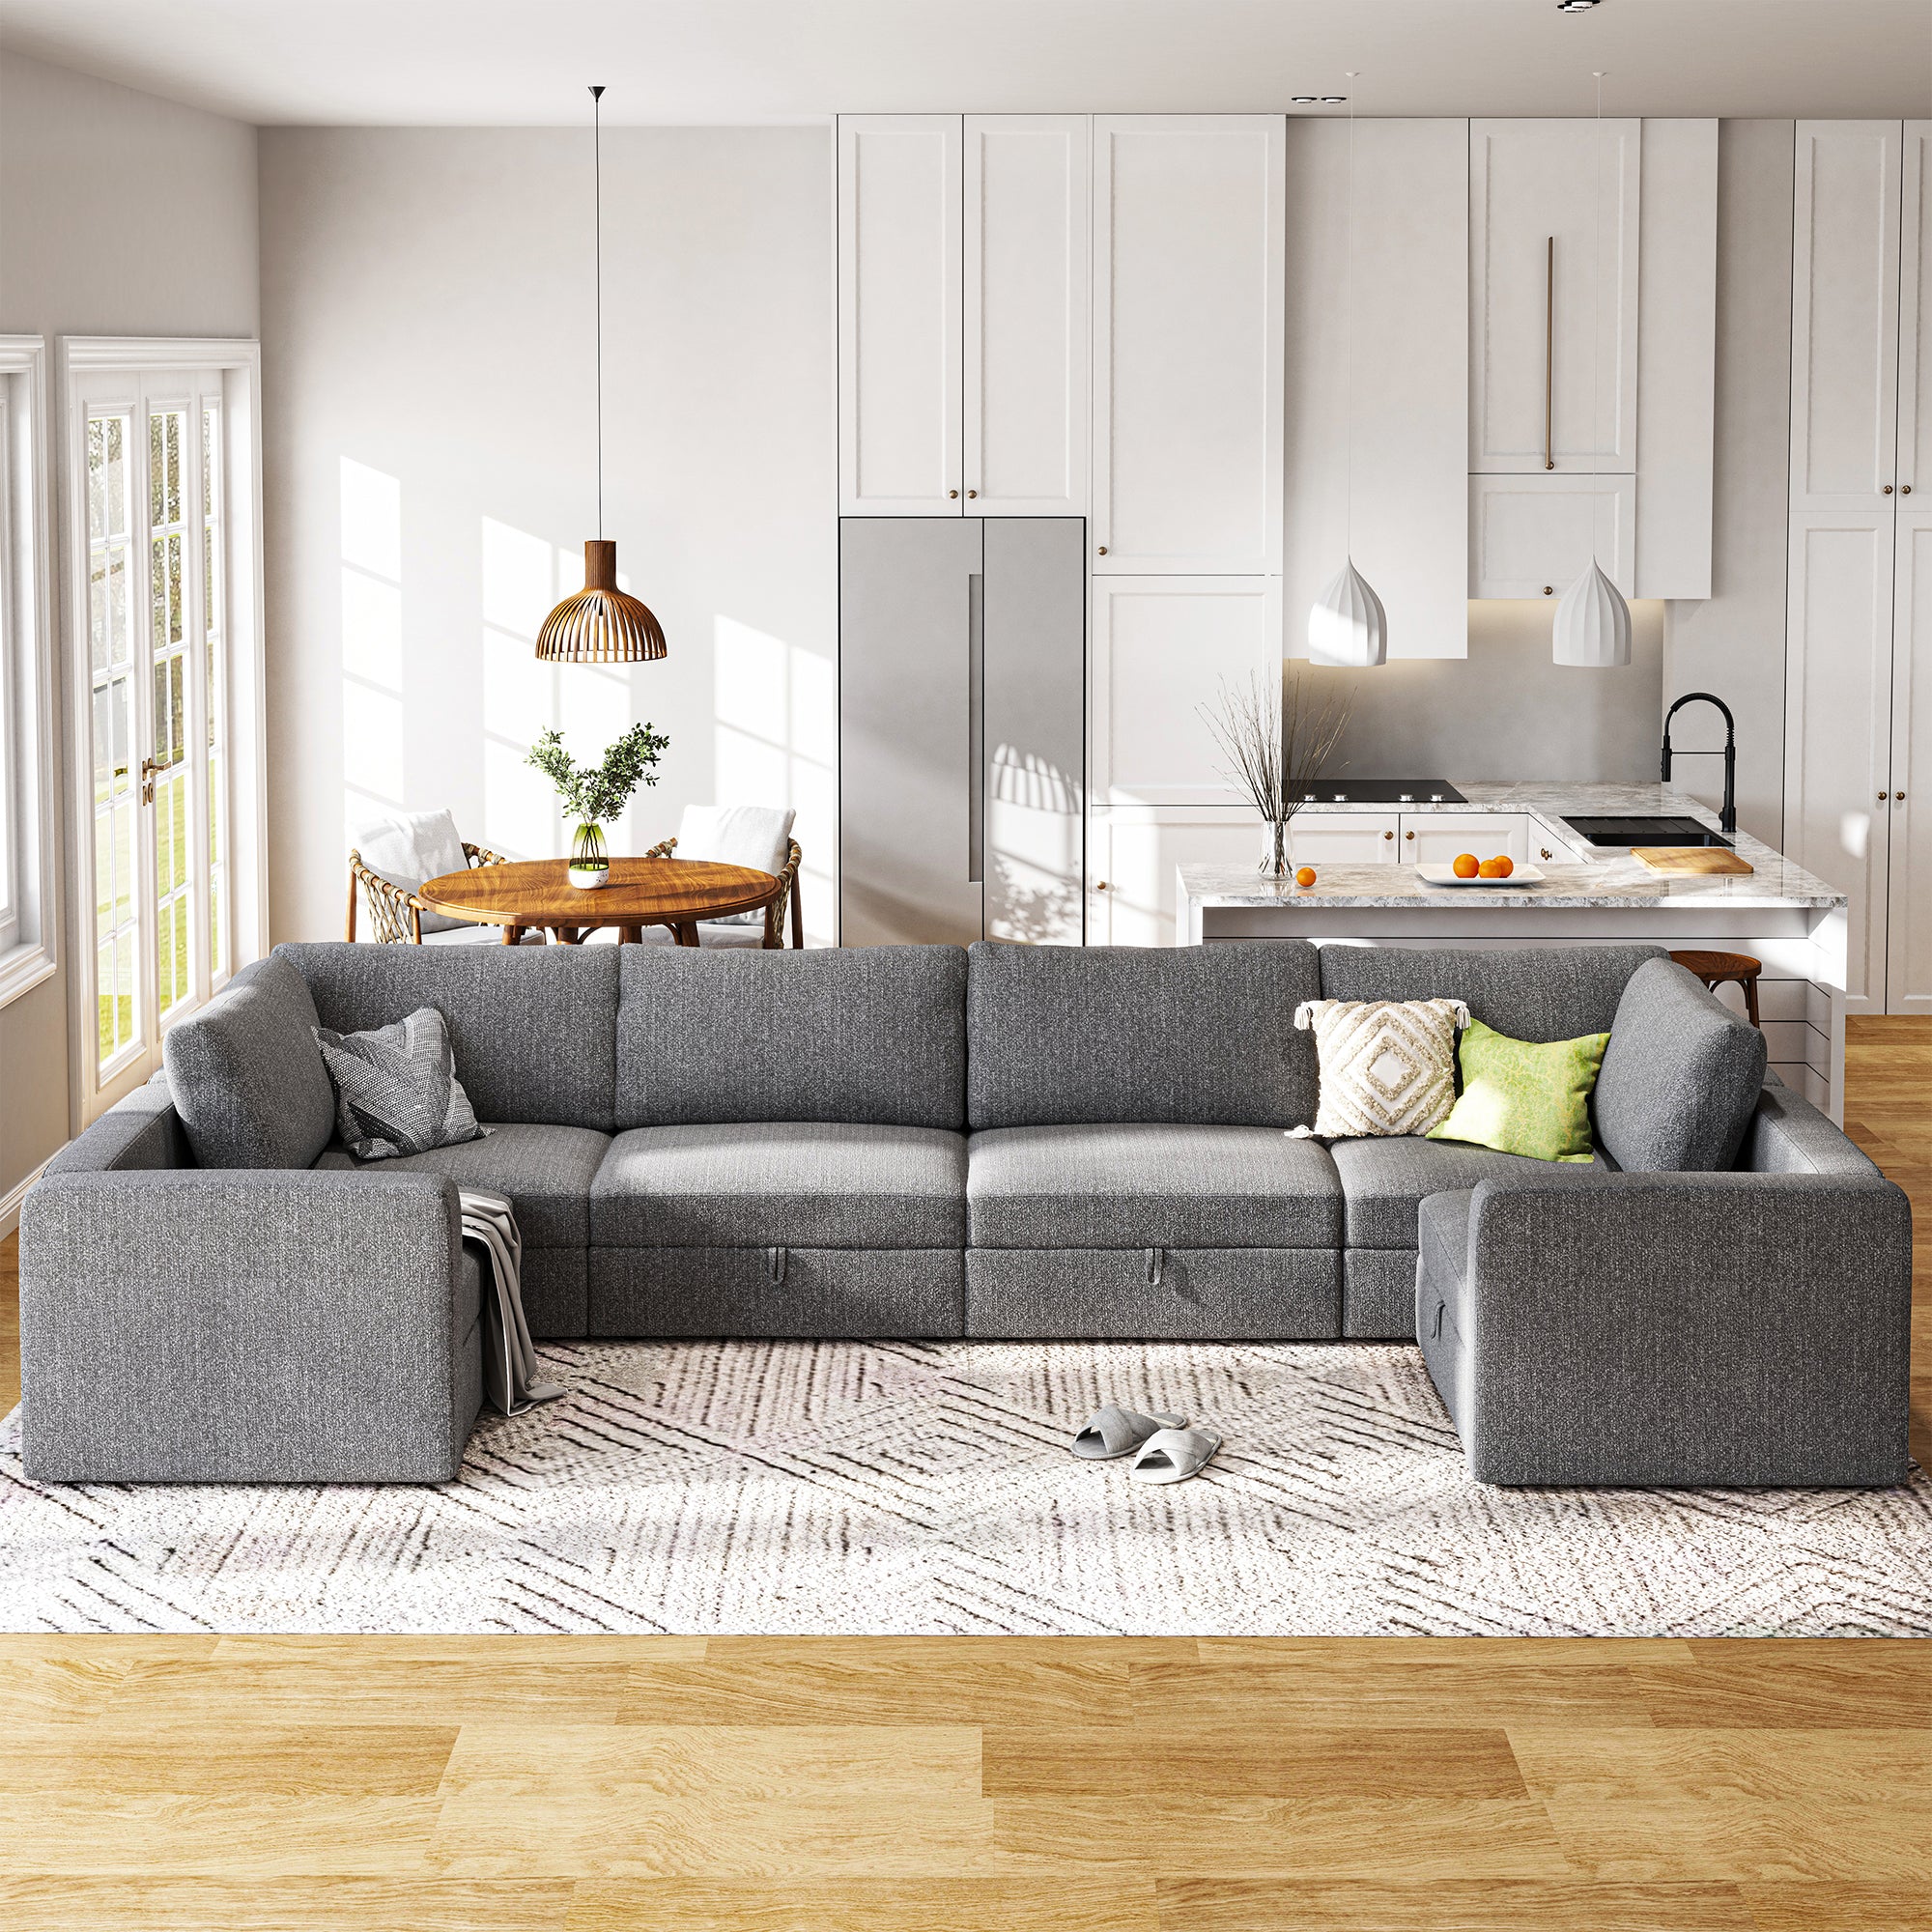 HONBAY Polyester Symmetrical U-shaped  Modular Sectional Sofa for Living Room